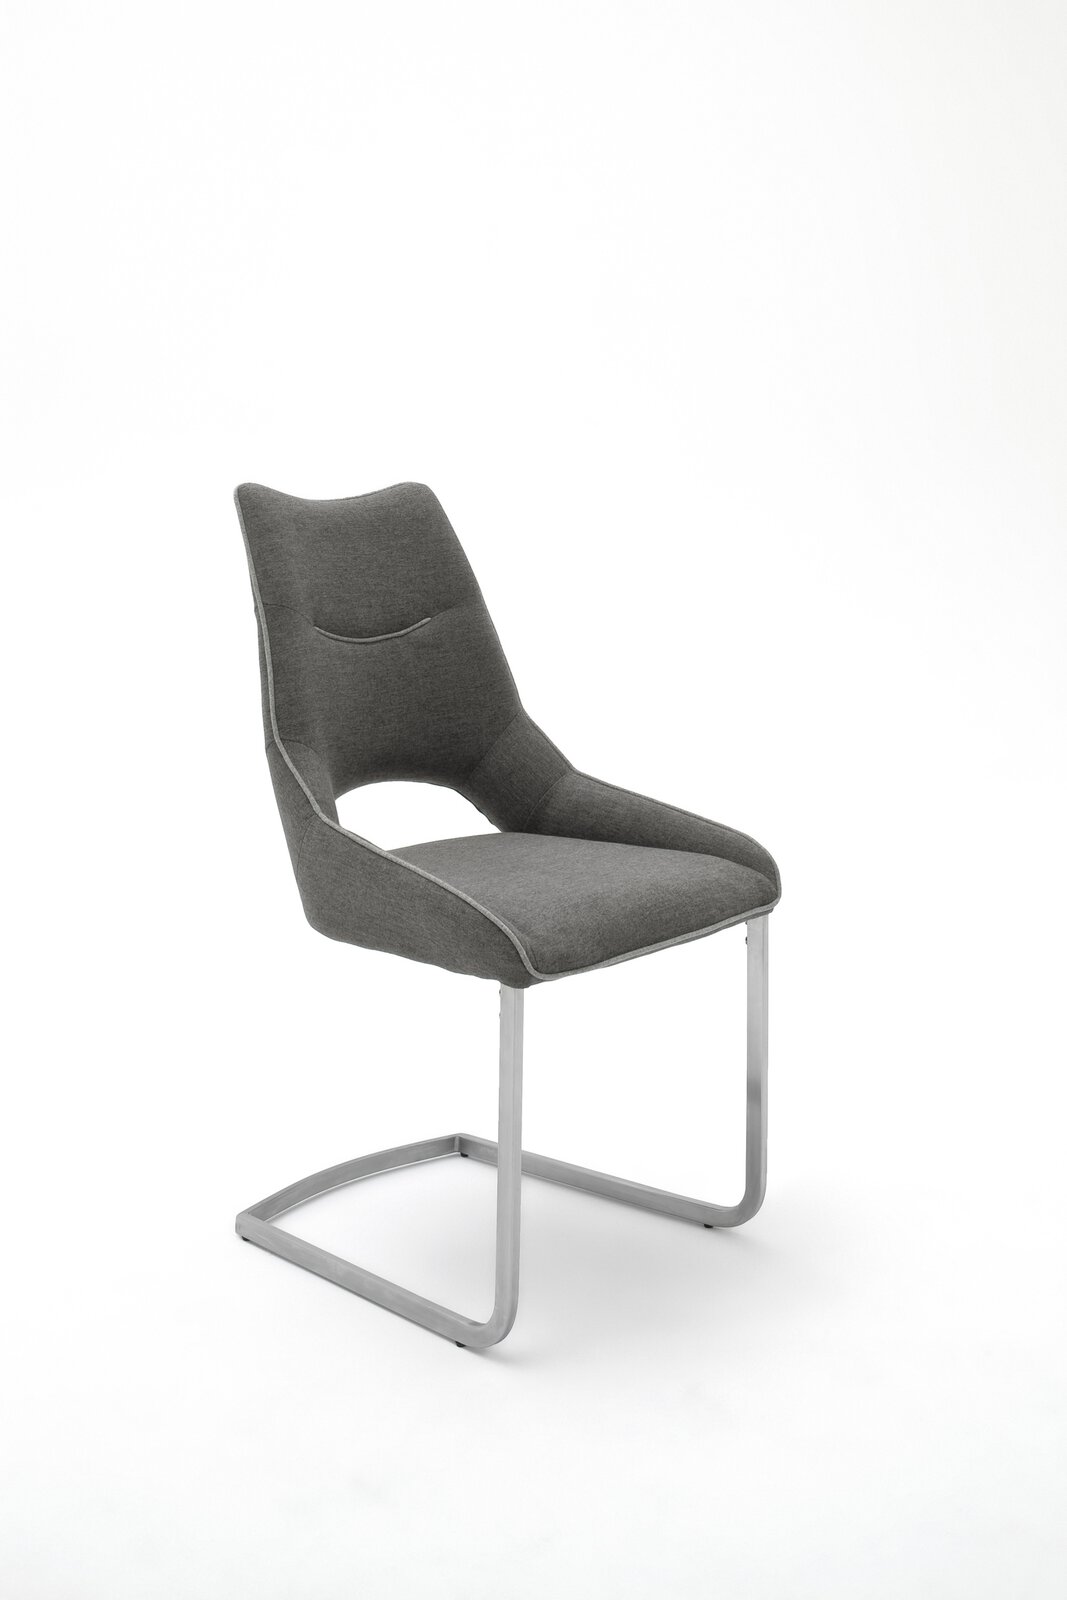 Stuhl MCA furniture Textil Stoff grau/hellgrau ca. 62 cm x